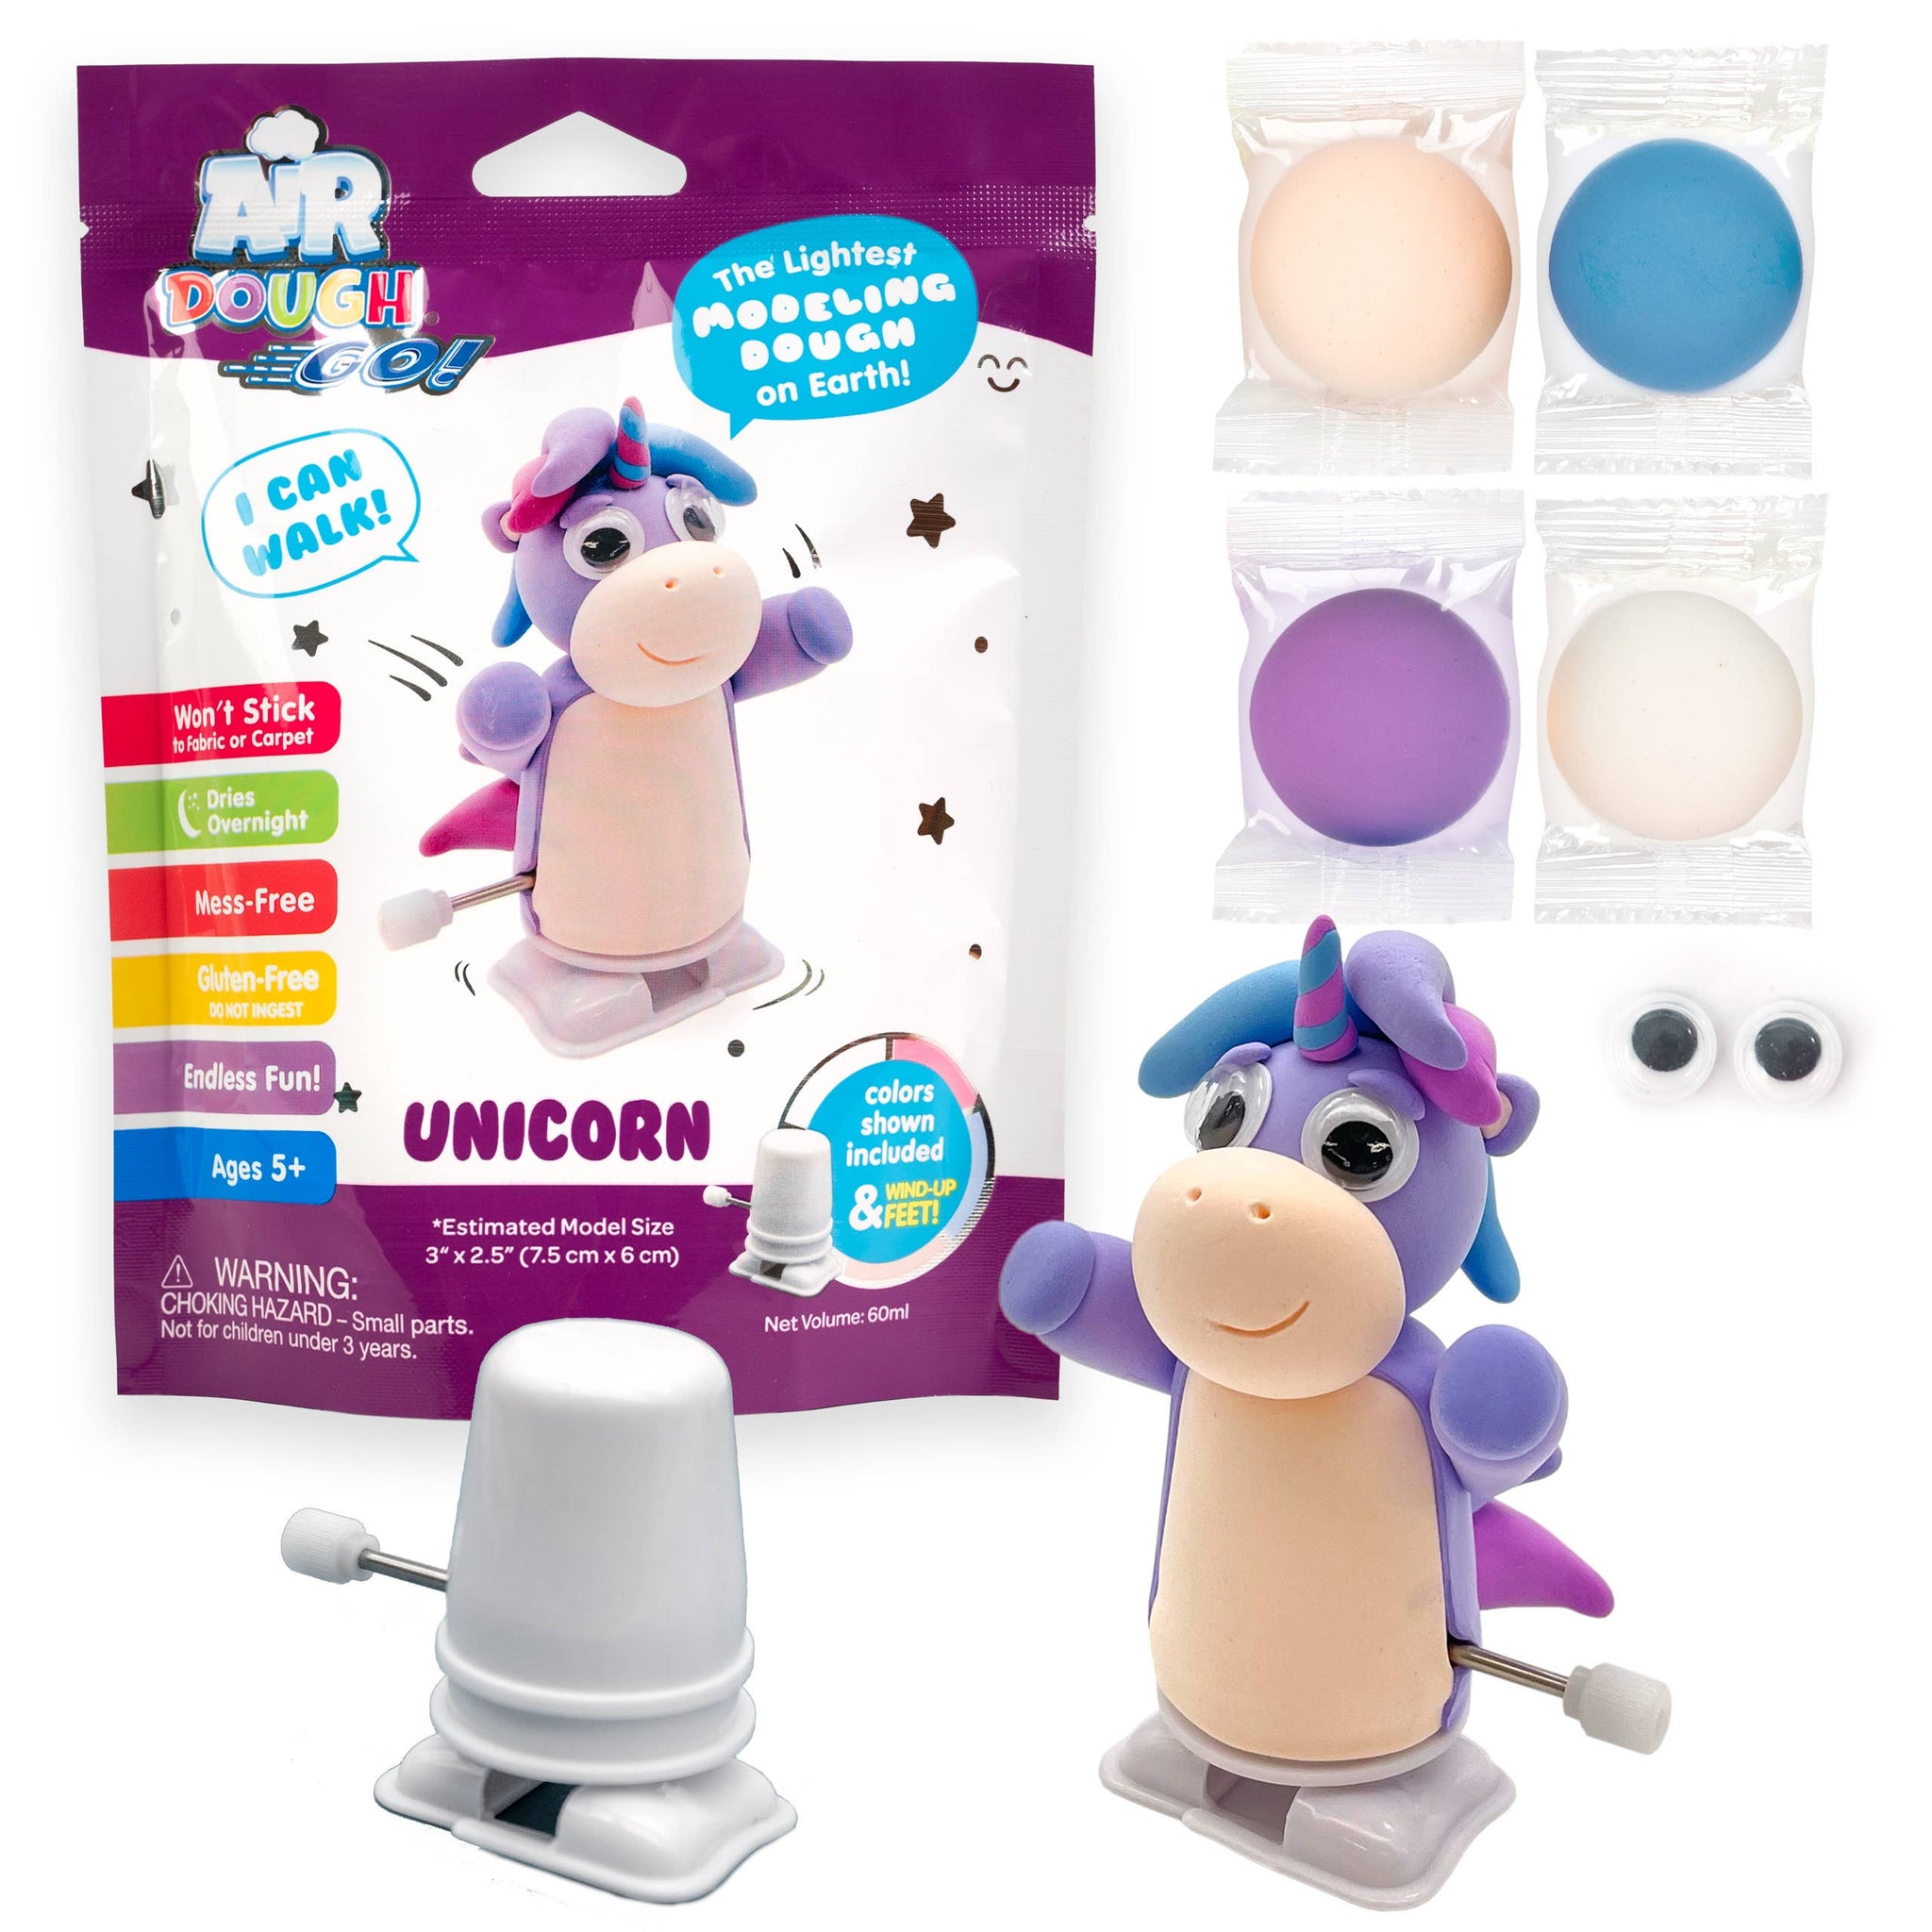 Air Dough Go - Unicorn